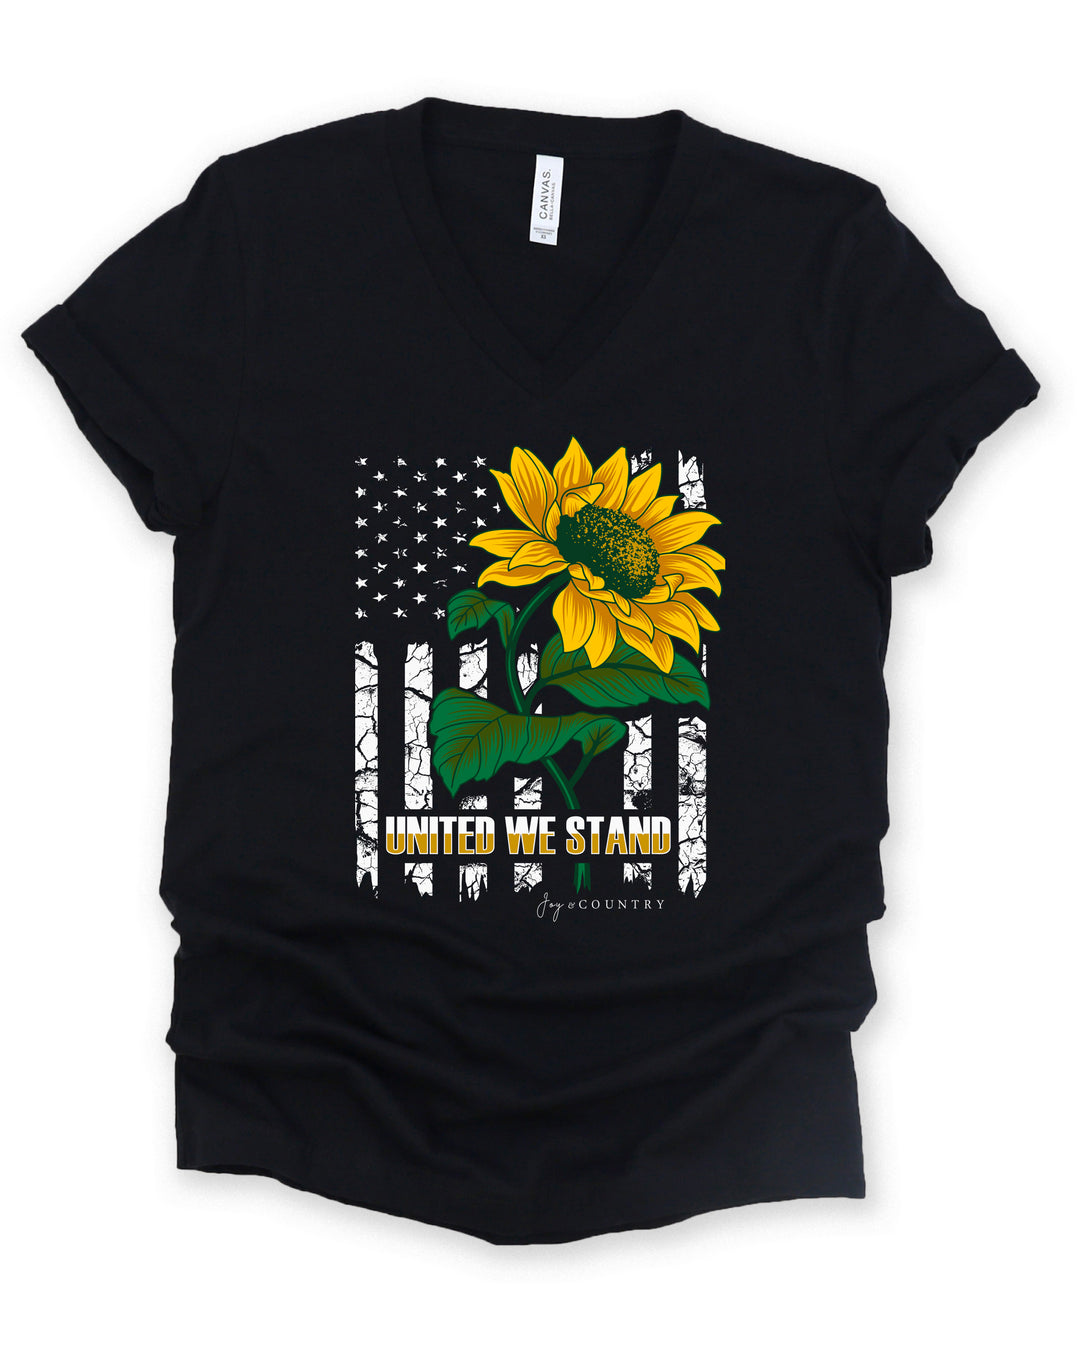 United We Stand American Flag Sunflower - Unisex V-Neck Tee - Joy & Country